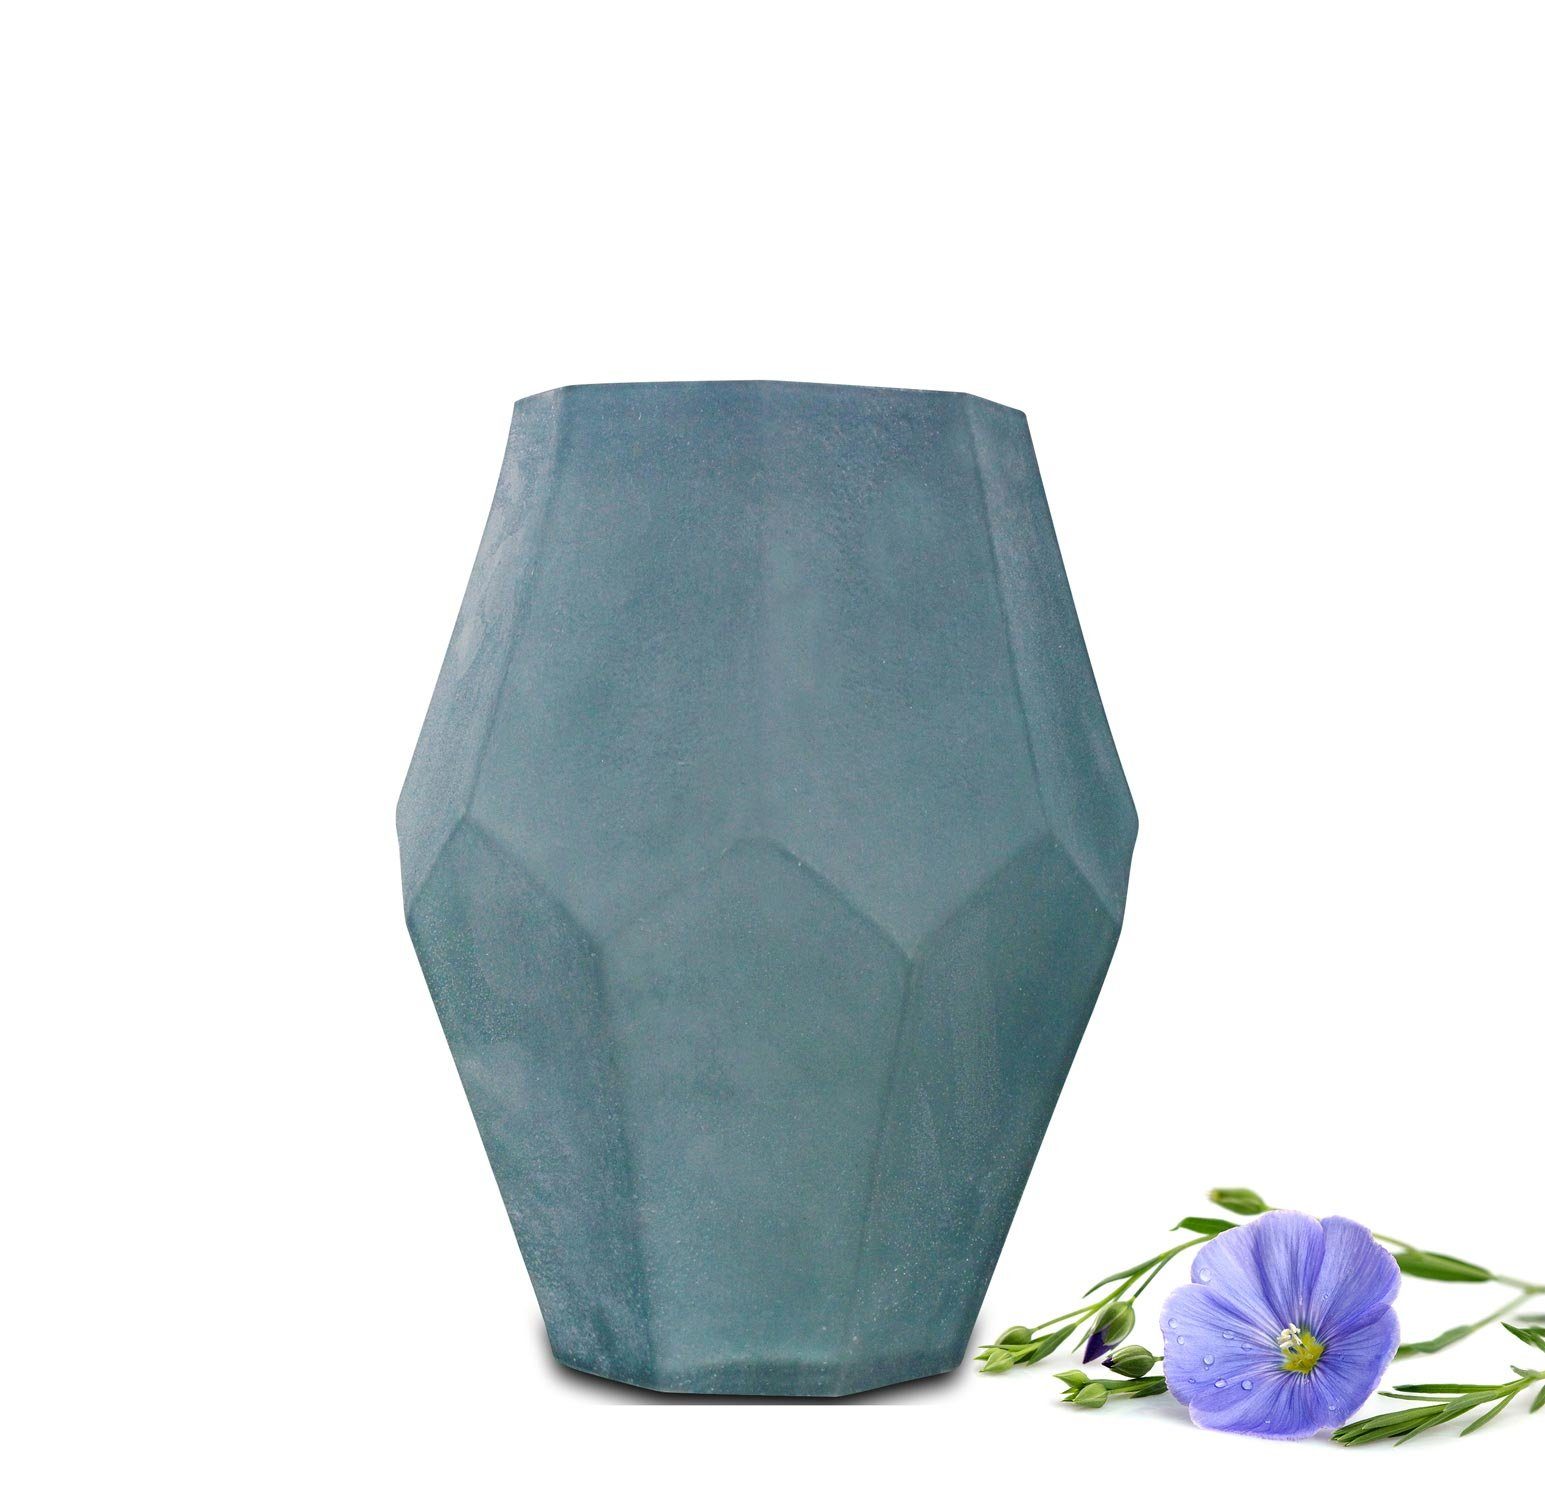 Sendez Dekovase Blumenvase Vase Tischvase Glasvase Dekovase Blumentopf Deko Blau